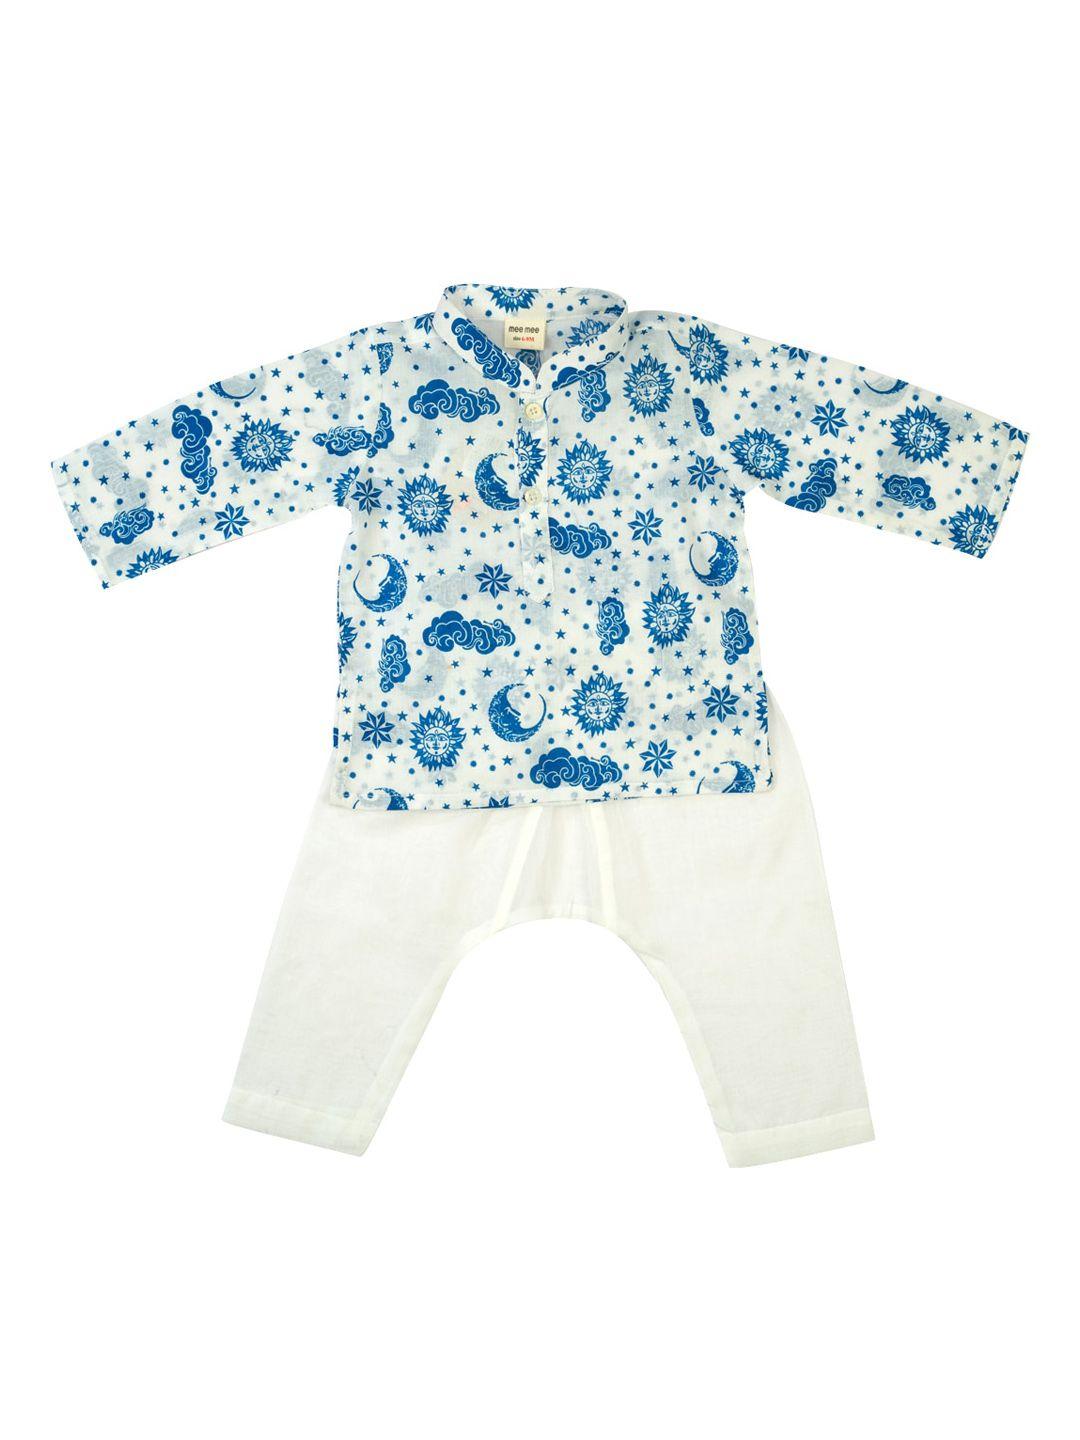 meemee-boys-white-&-blue-ethnic-motifs-printed-regular-pure-cotton-kurta-with-pyjamas